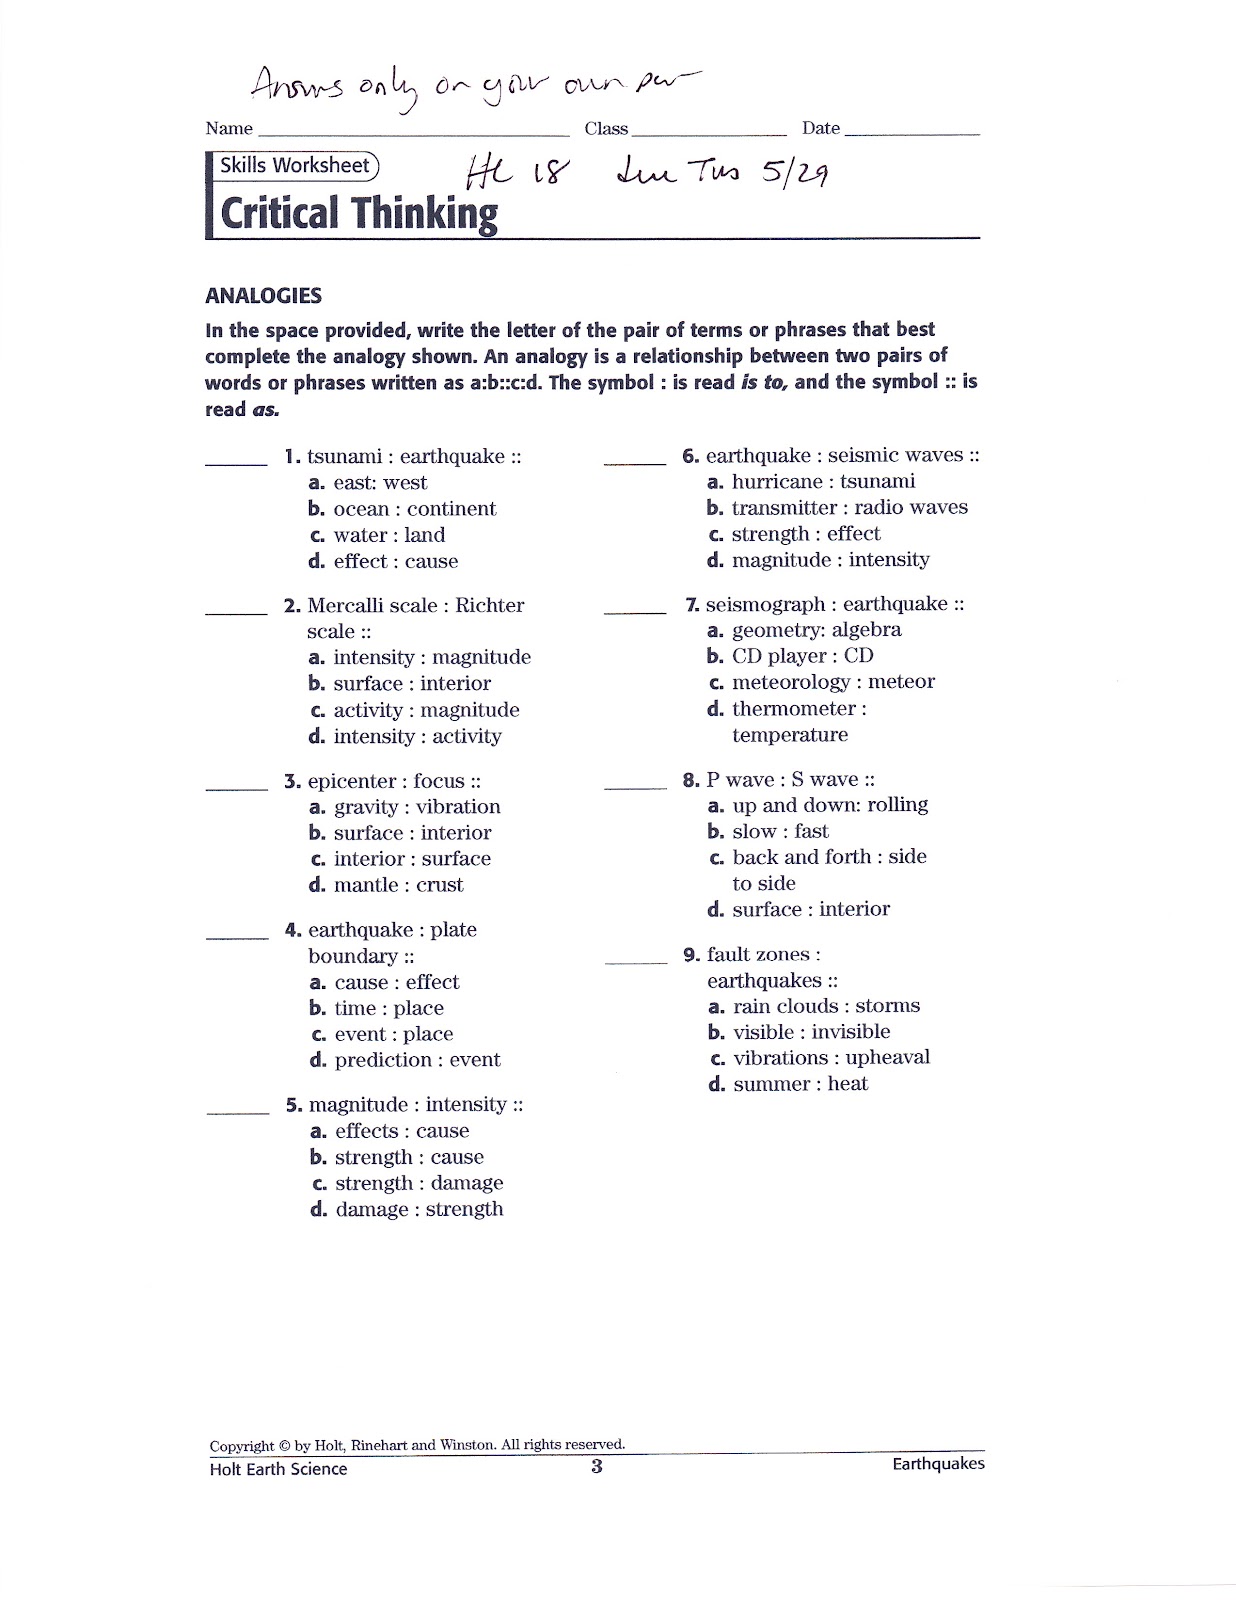 Critical thinking vocabulary activities